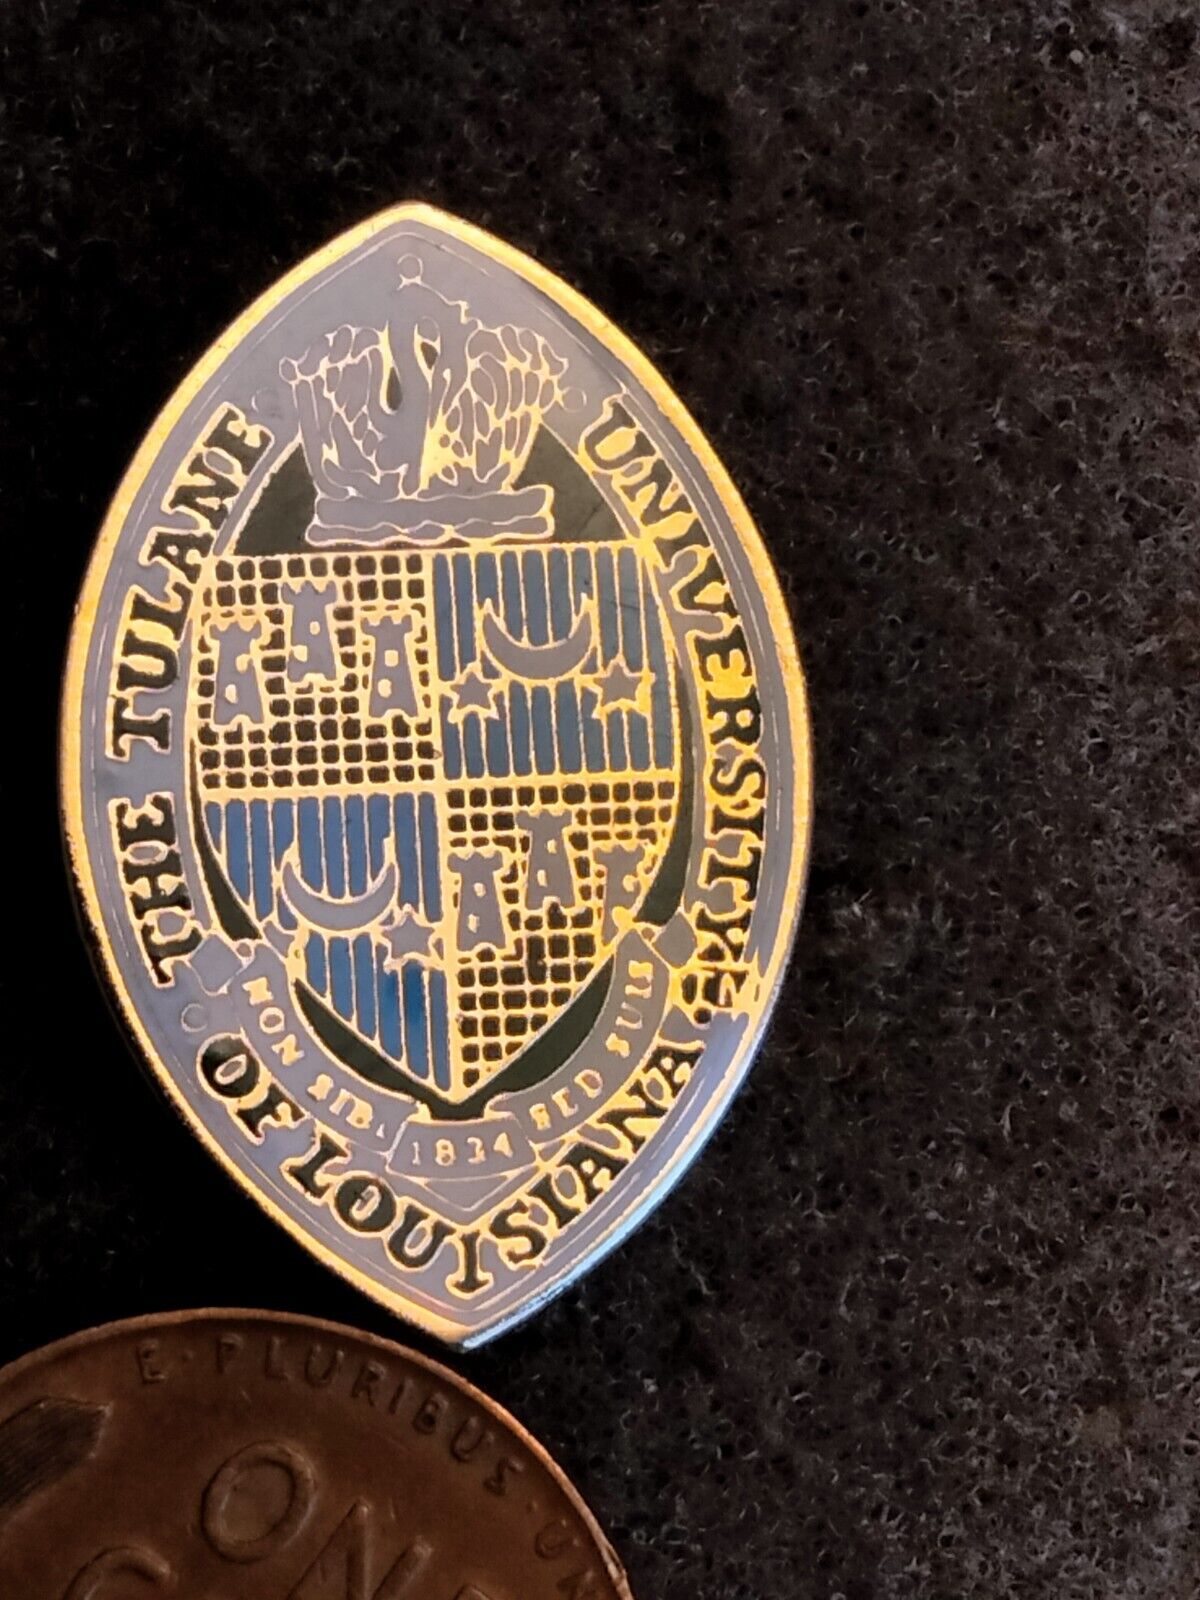 Tulane University of Louisiana coat of arms pin